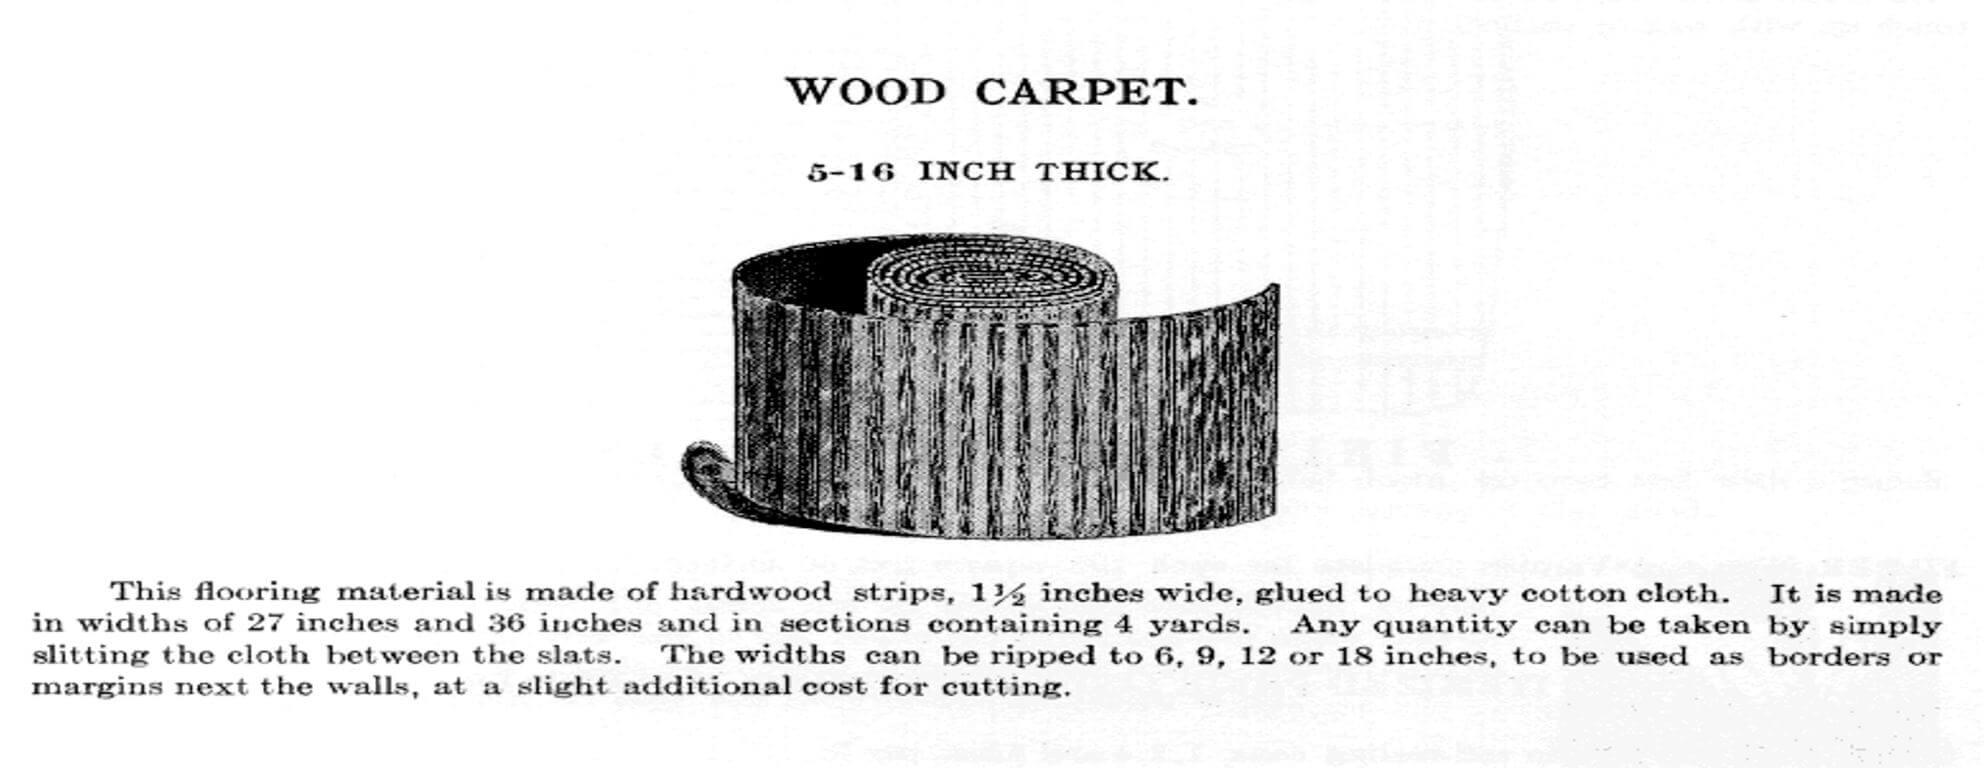 Wood Carpet and Wood Flooring History